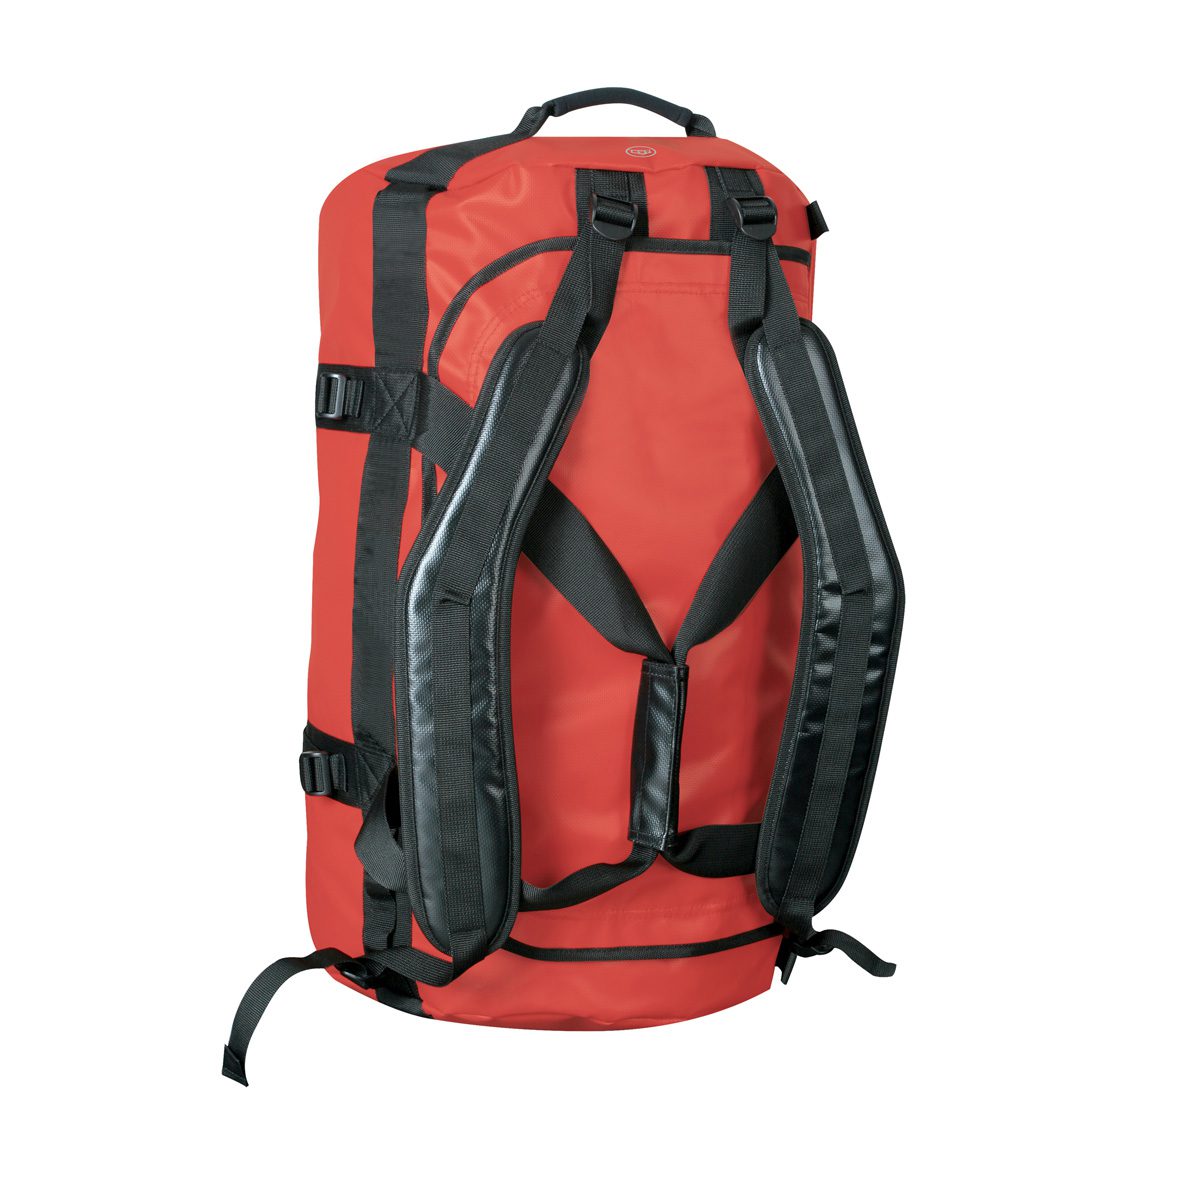 Stormtech Atlantis Waterproof Gear Bag - Large #GBW-1LLE Red Back